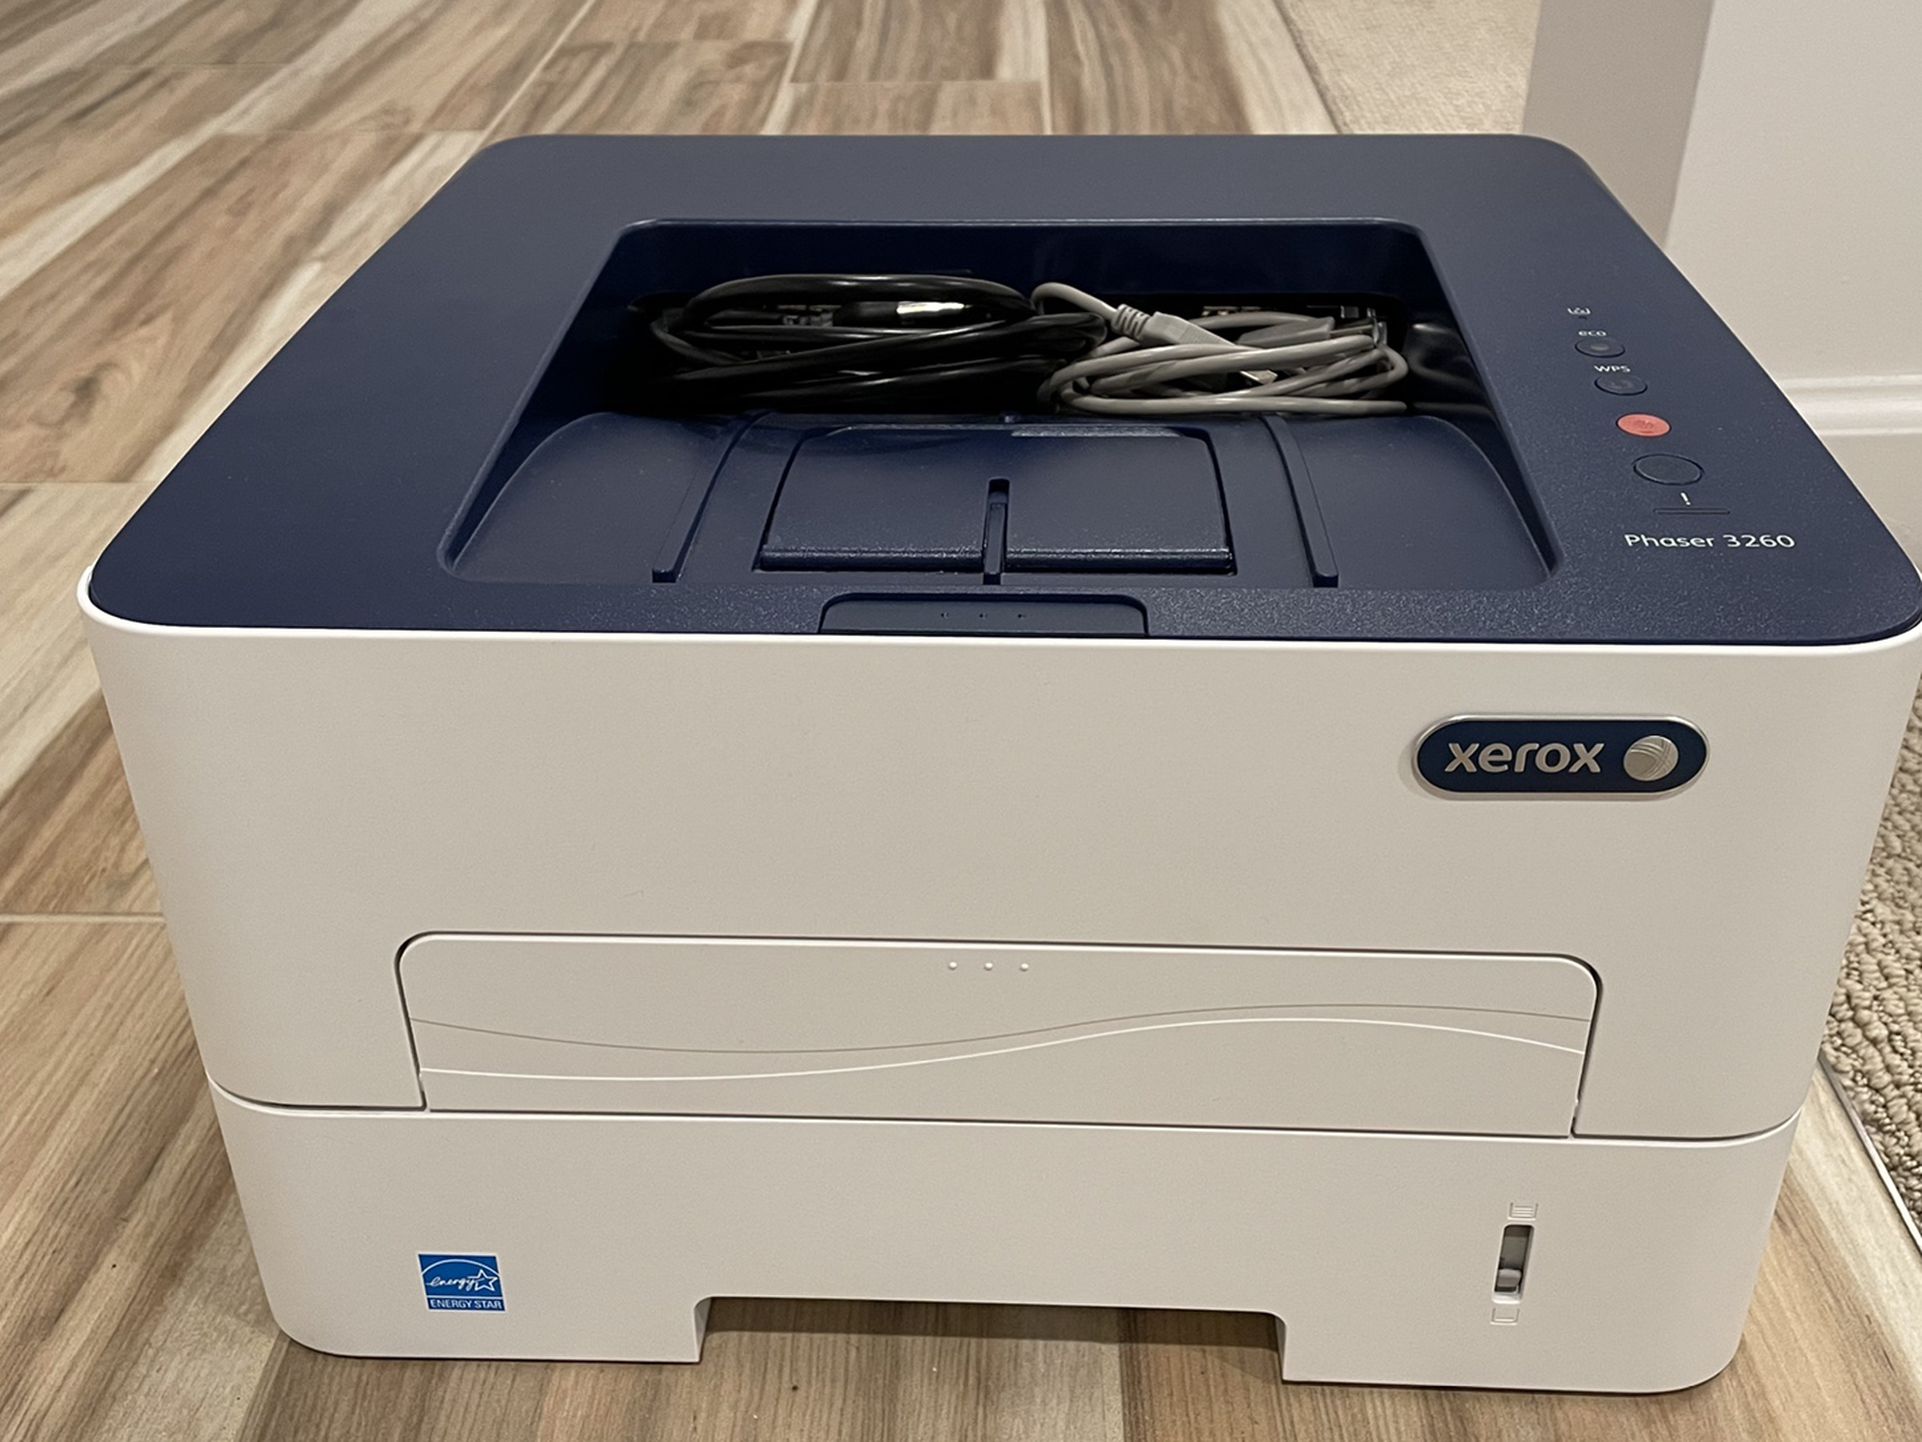 Xerox Phaser 3260 WiFi Laser Printer